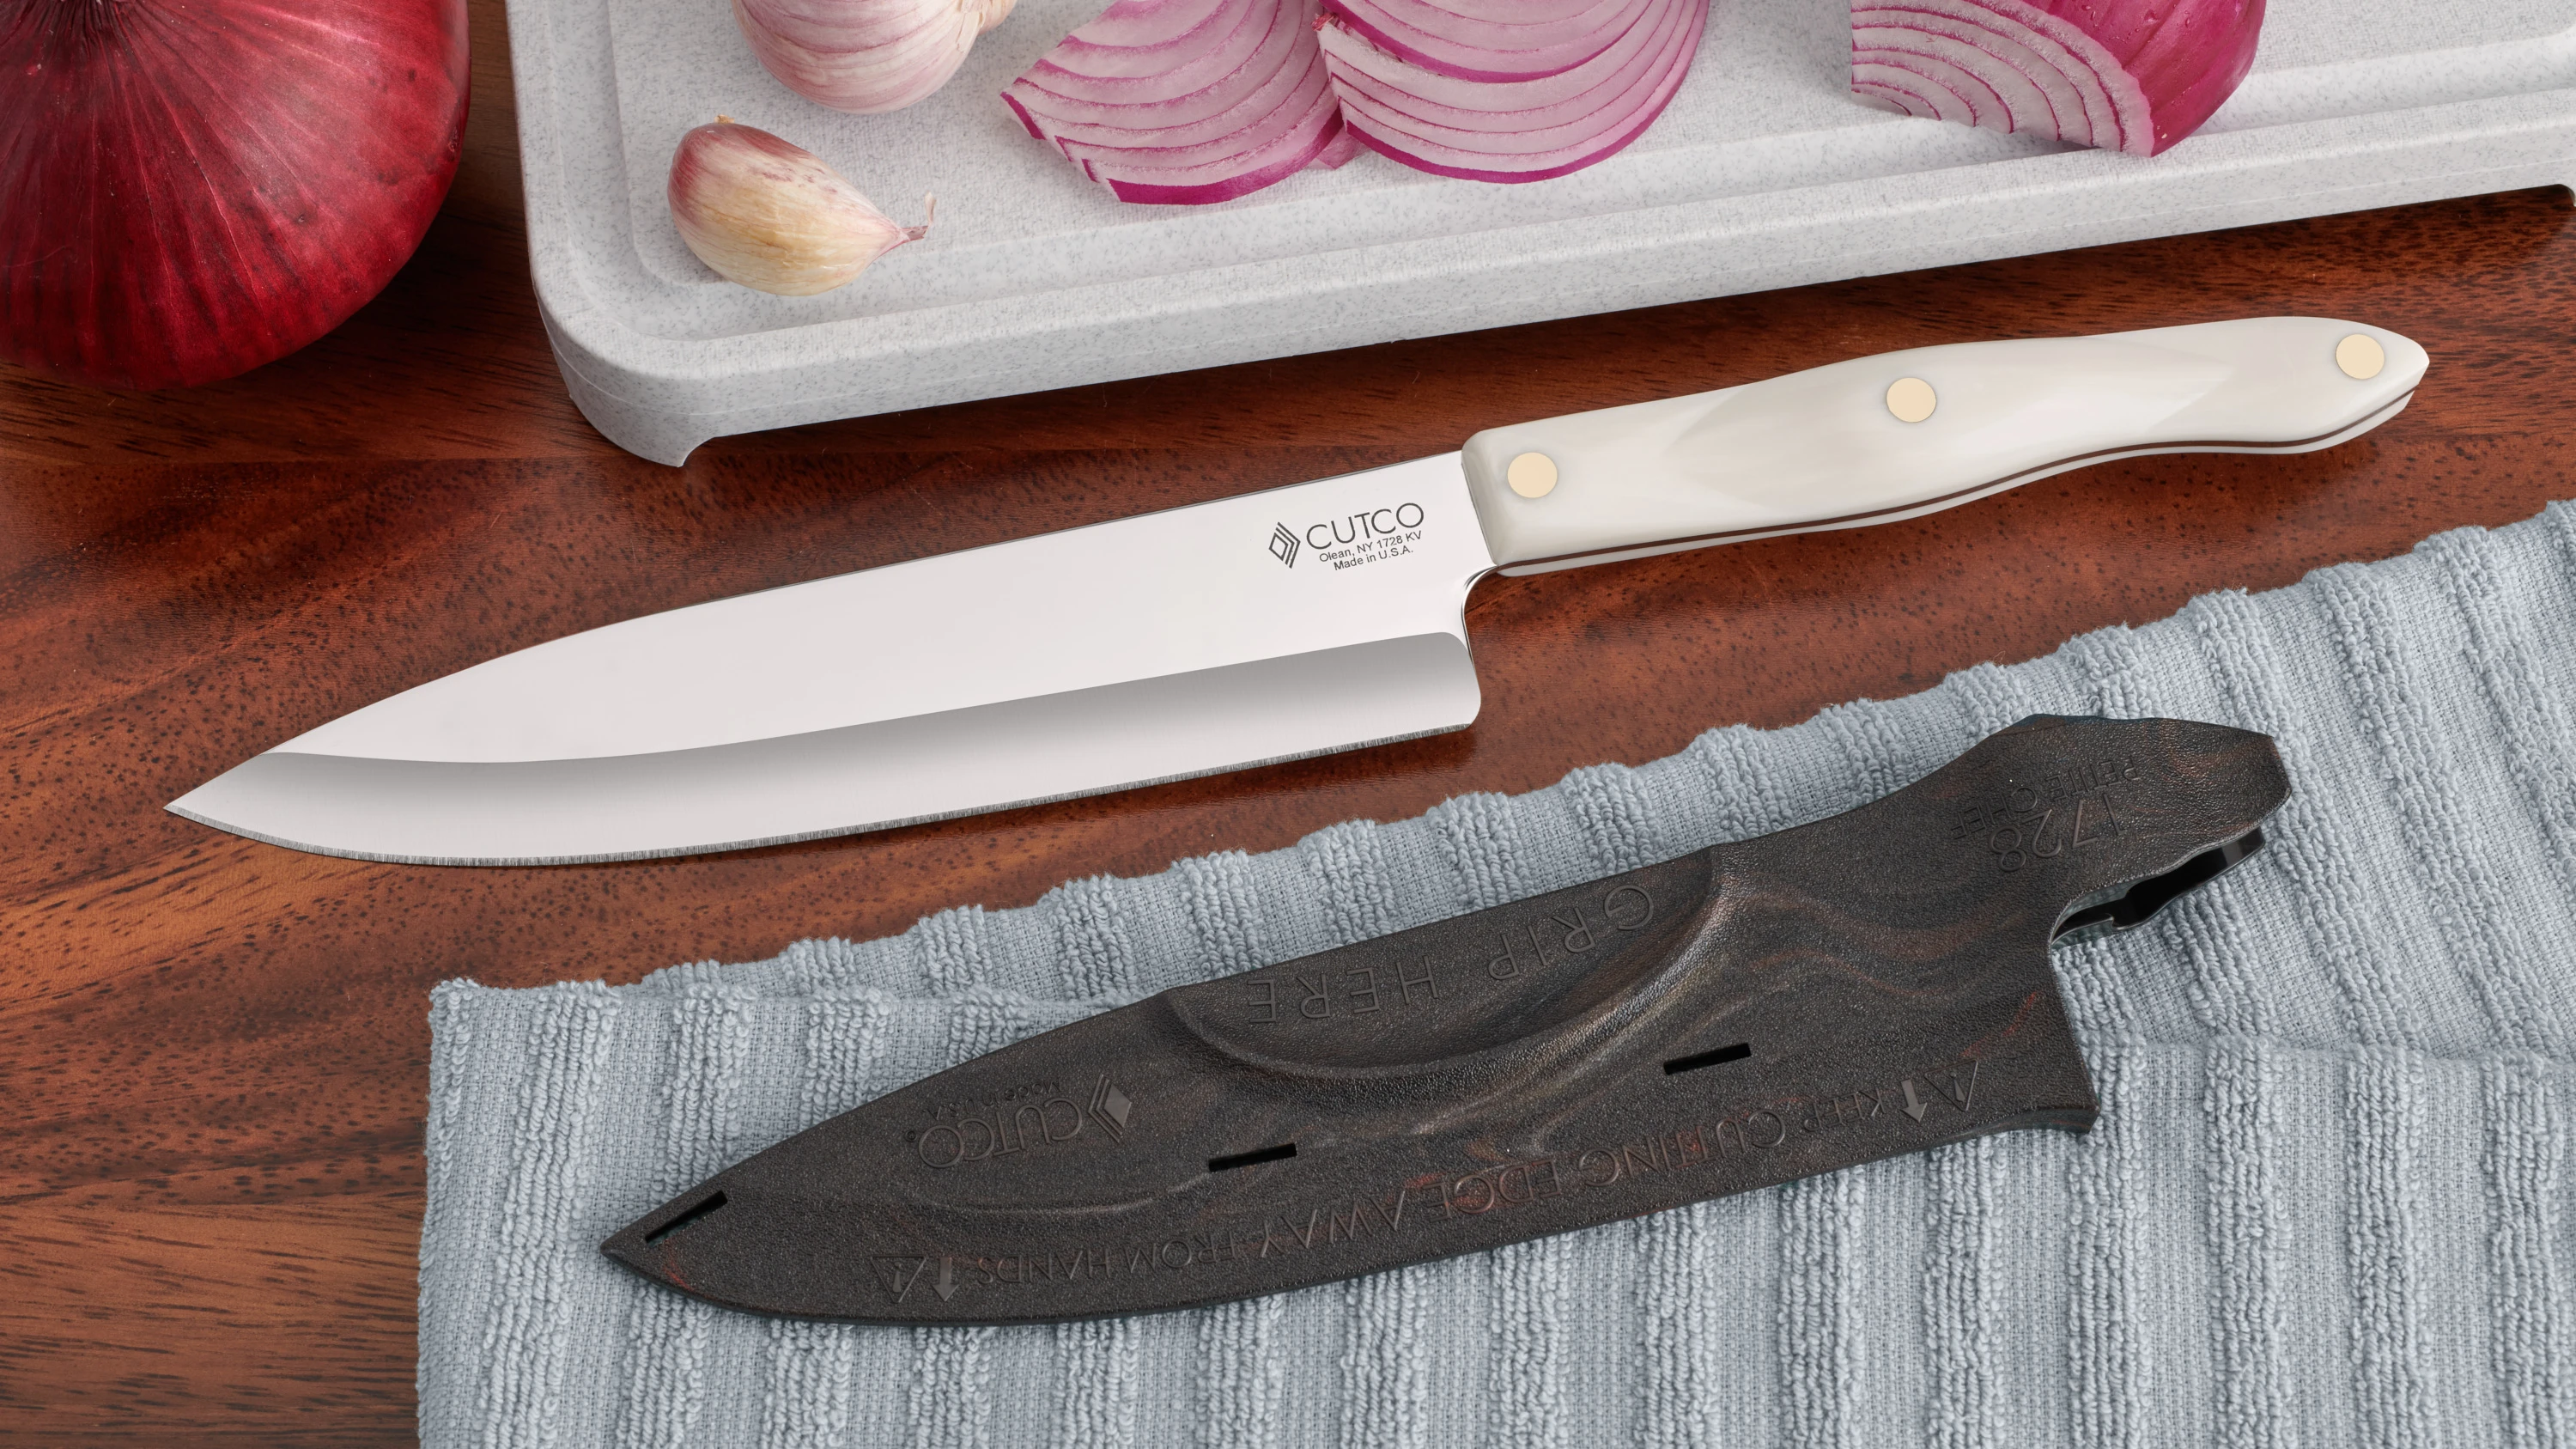  Cutco Sharpener Great Buy for Straight Edge knives : Home &  Kitchen